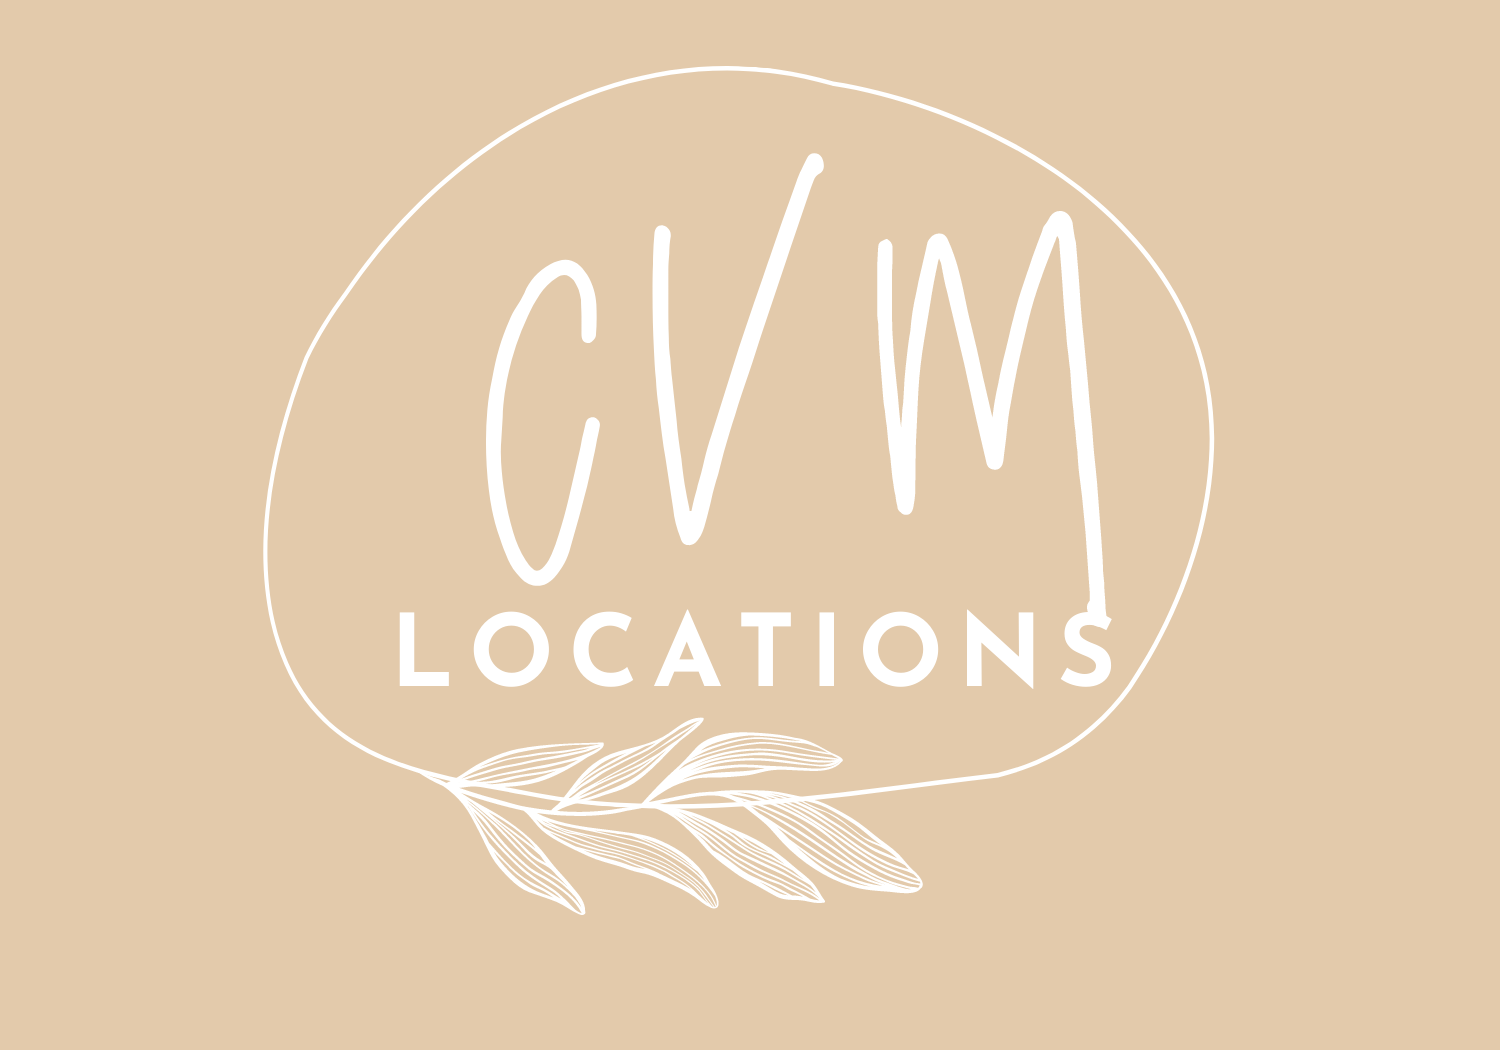 CVM Locations